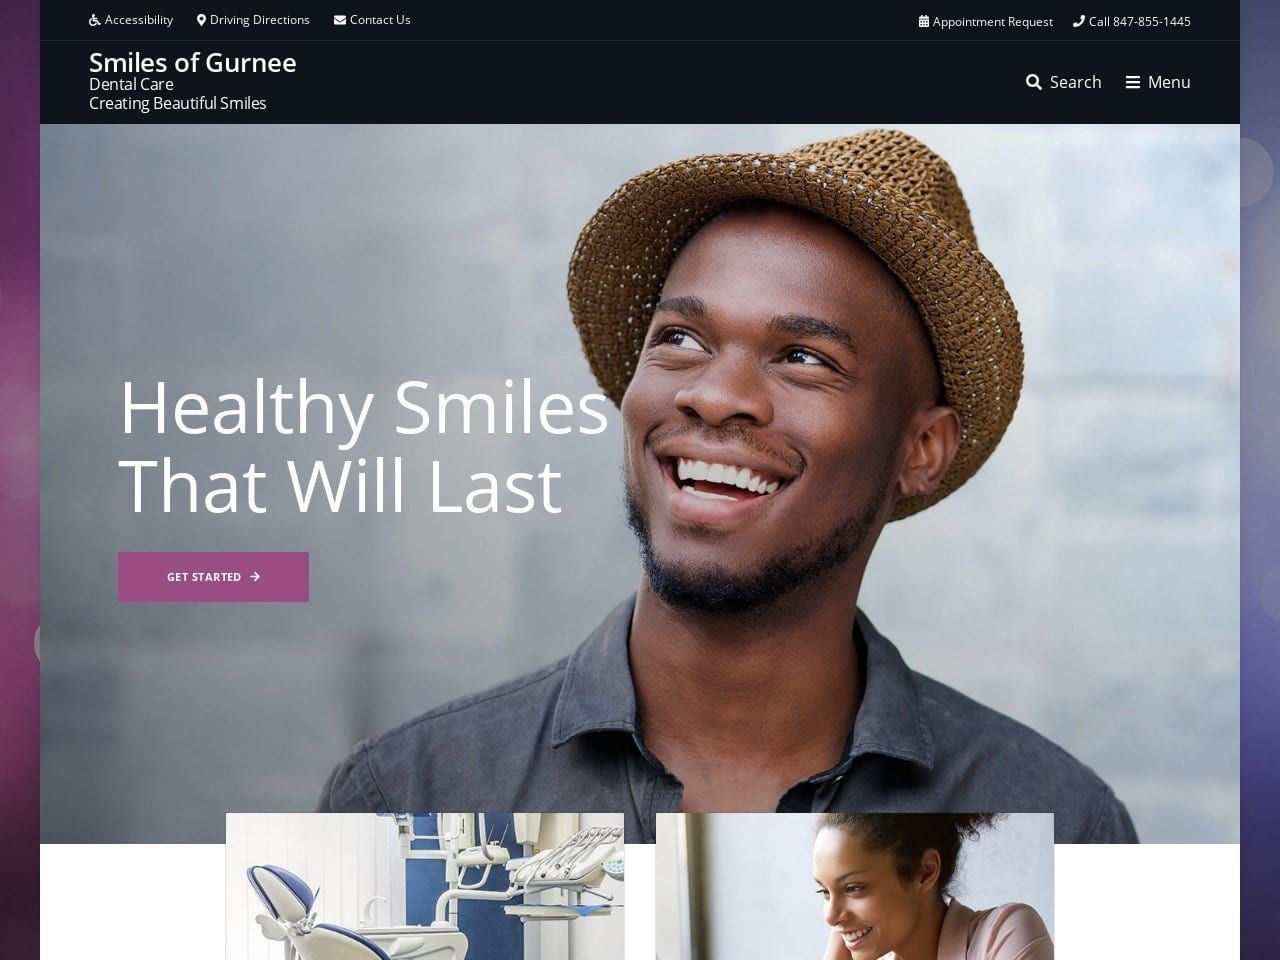 Smiles of Gurnee Website Screenshot from smilesofgurnee.com